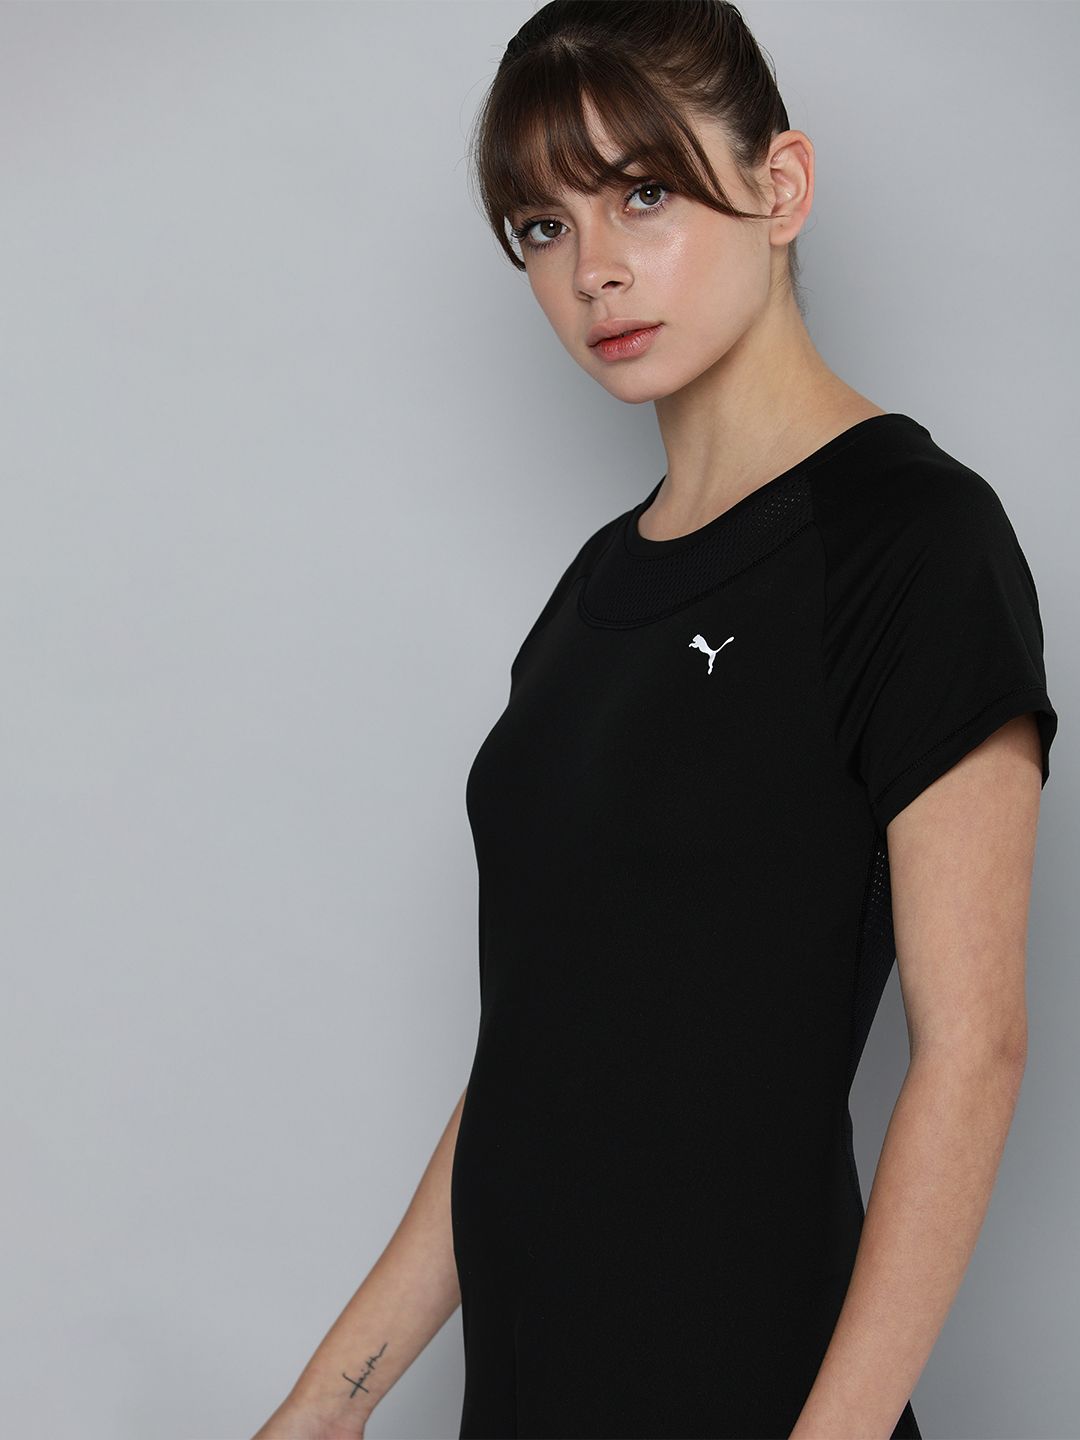 Puma Women Black Solid Round-Neck Running T-shirt Price in India